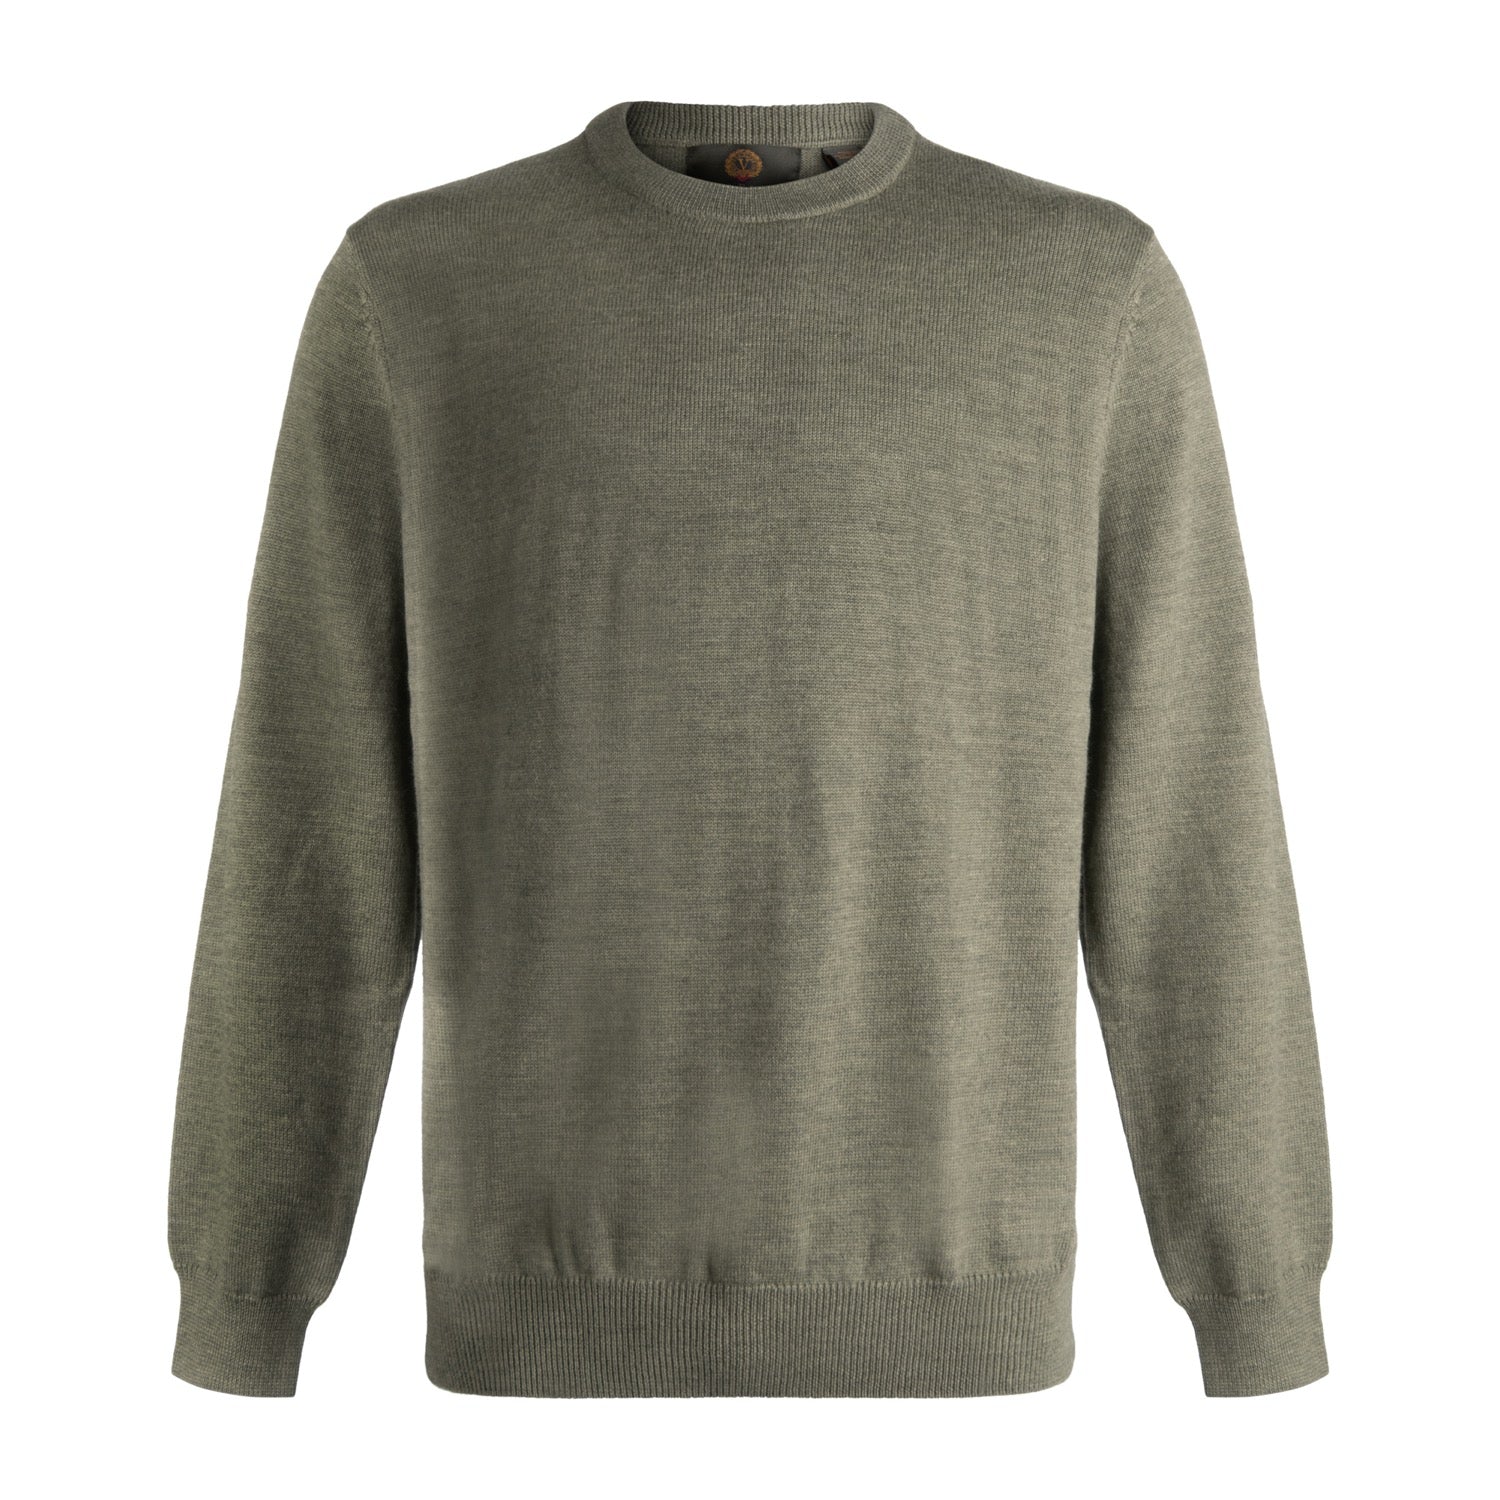 Extra Fine 'Zegna Baruffa' Merino Wool Crew Neck Sweater in Sage Melange by Viyella